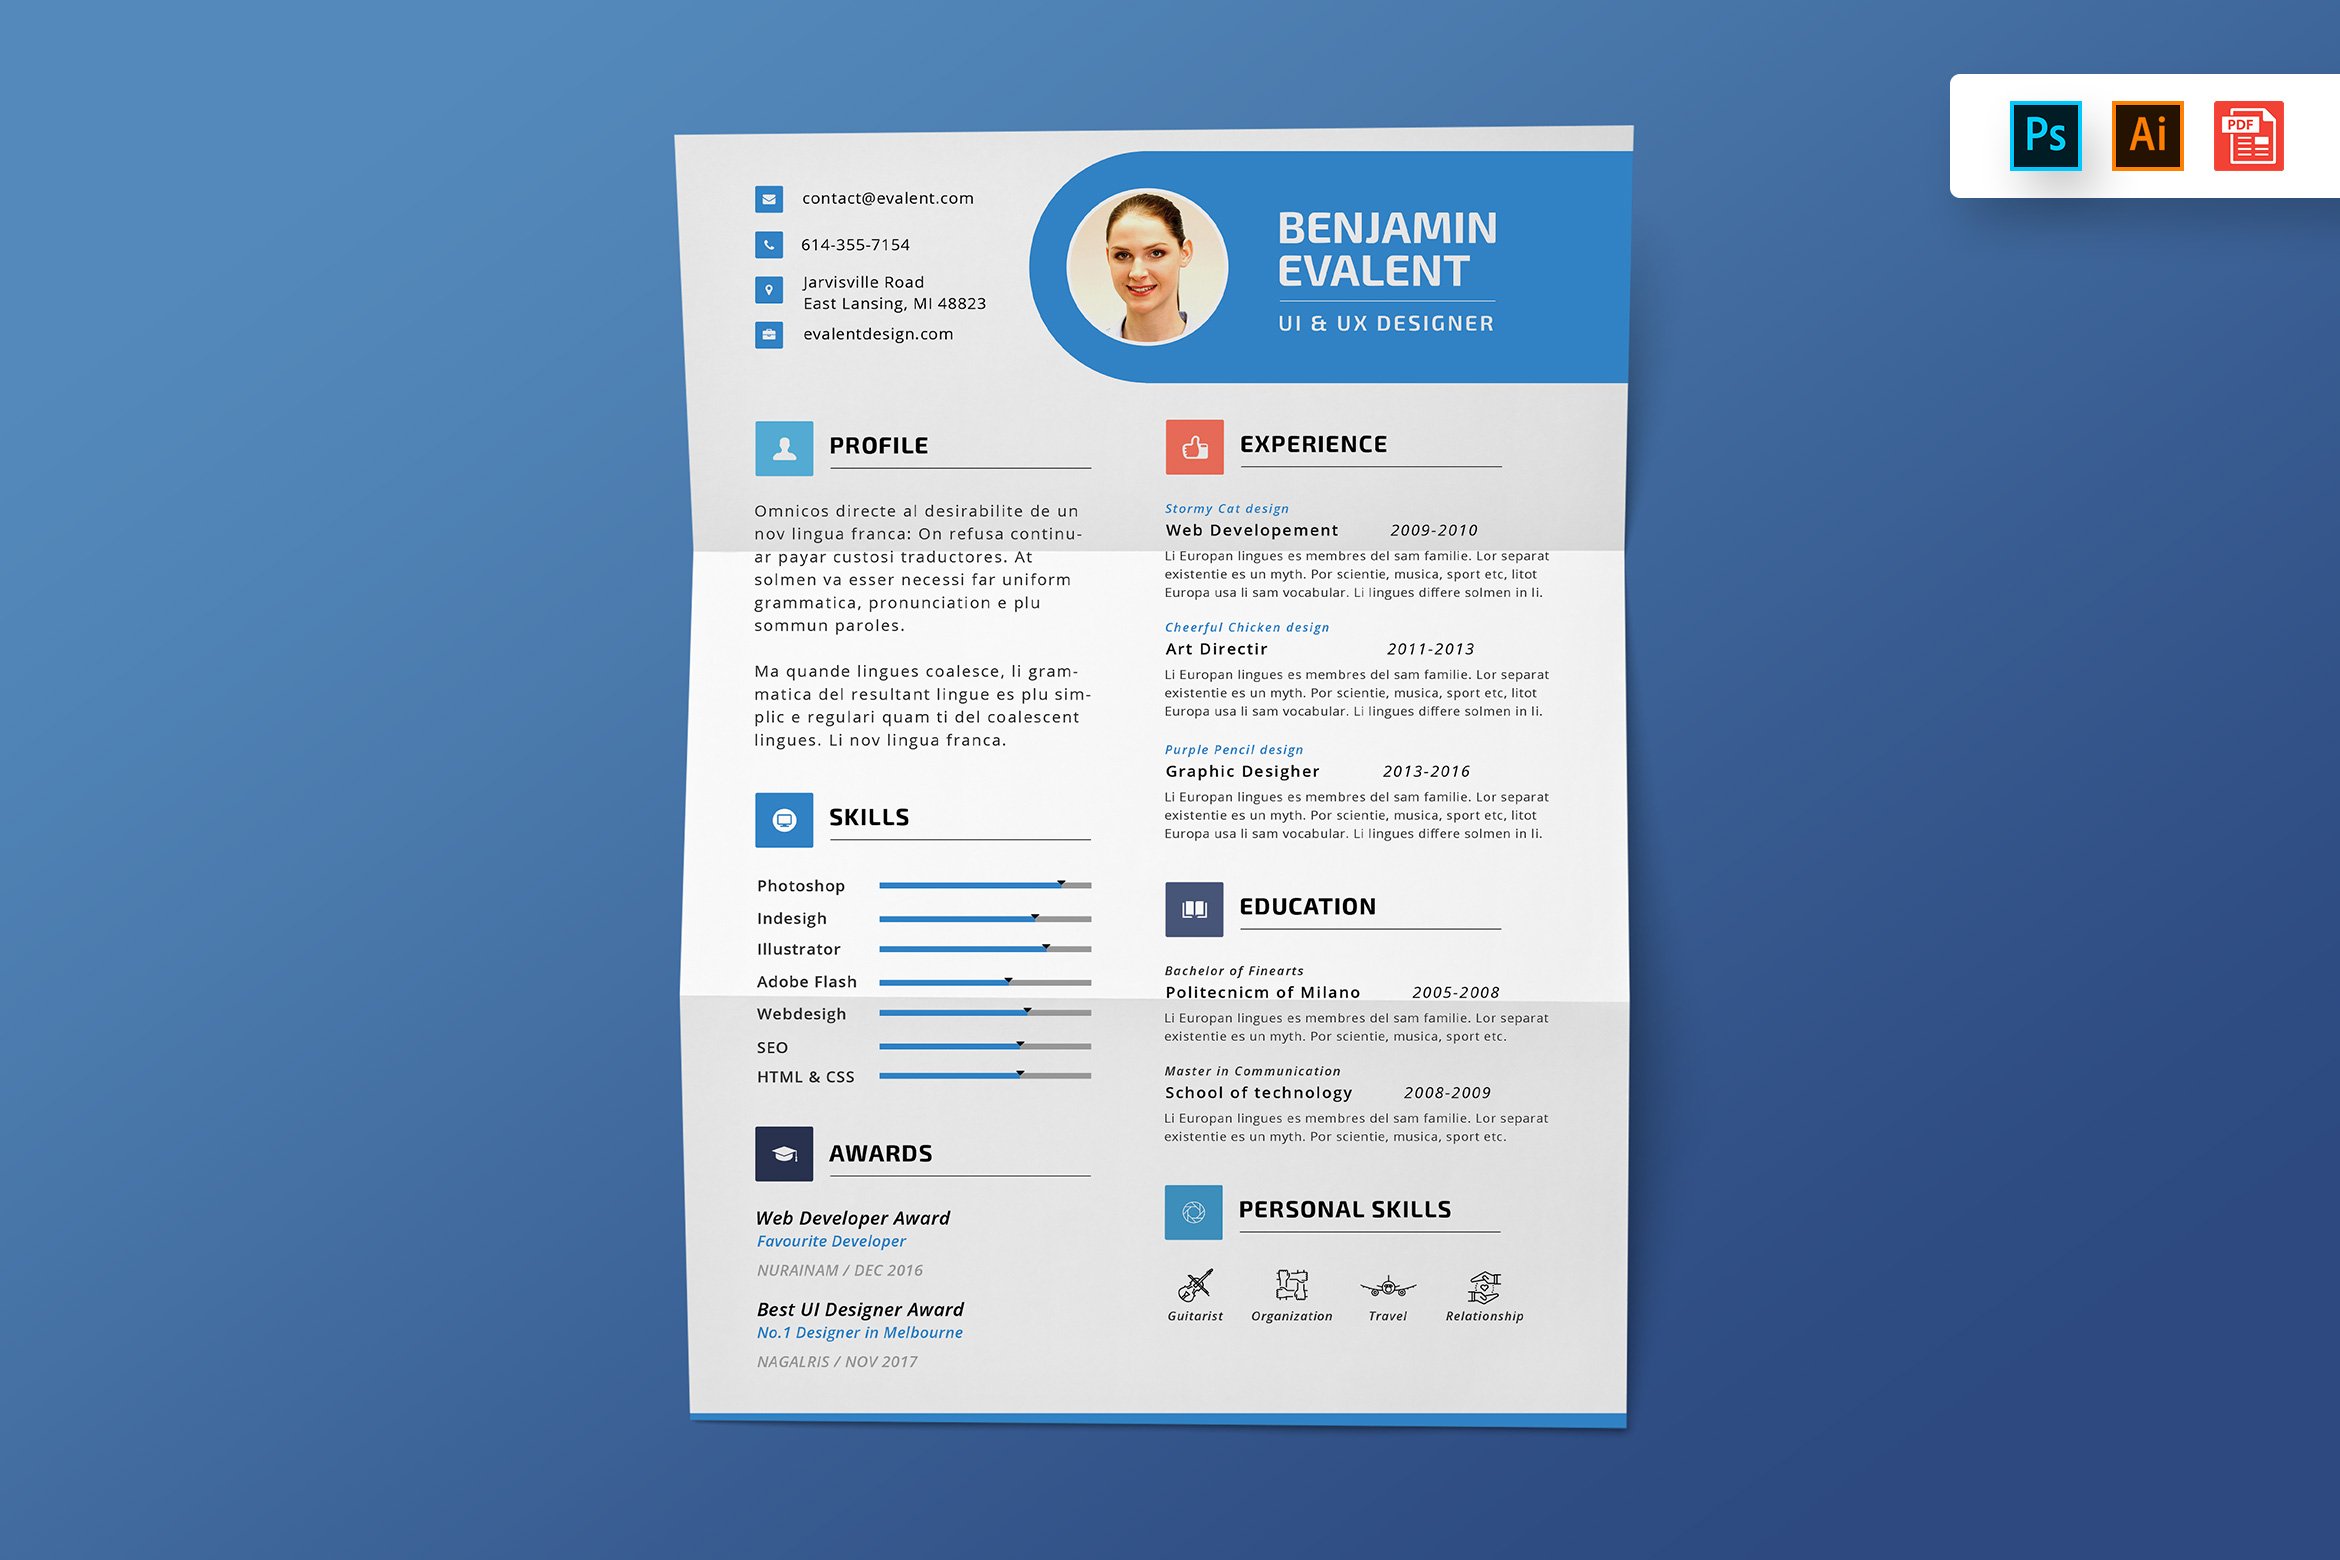 Minimalist CV Resume Template cover image.